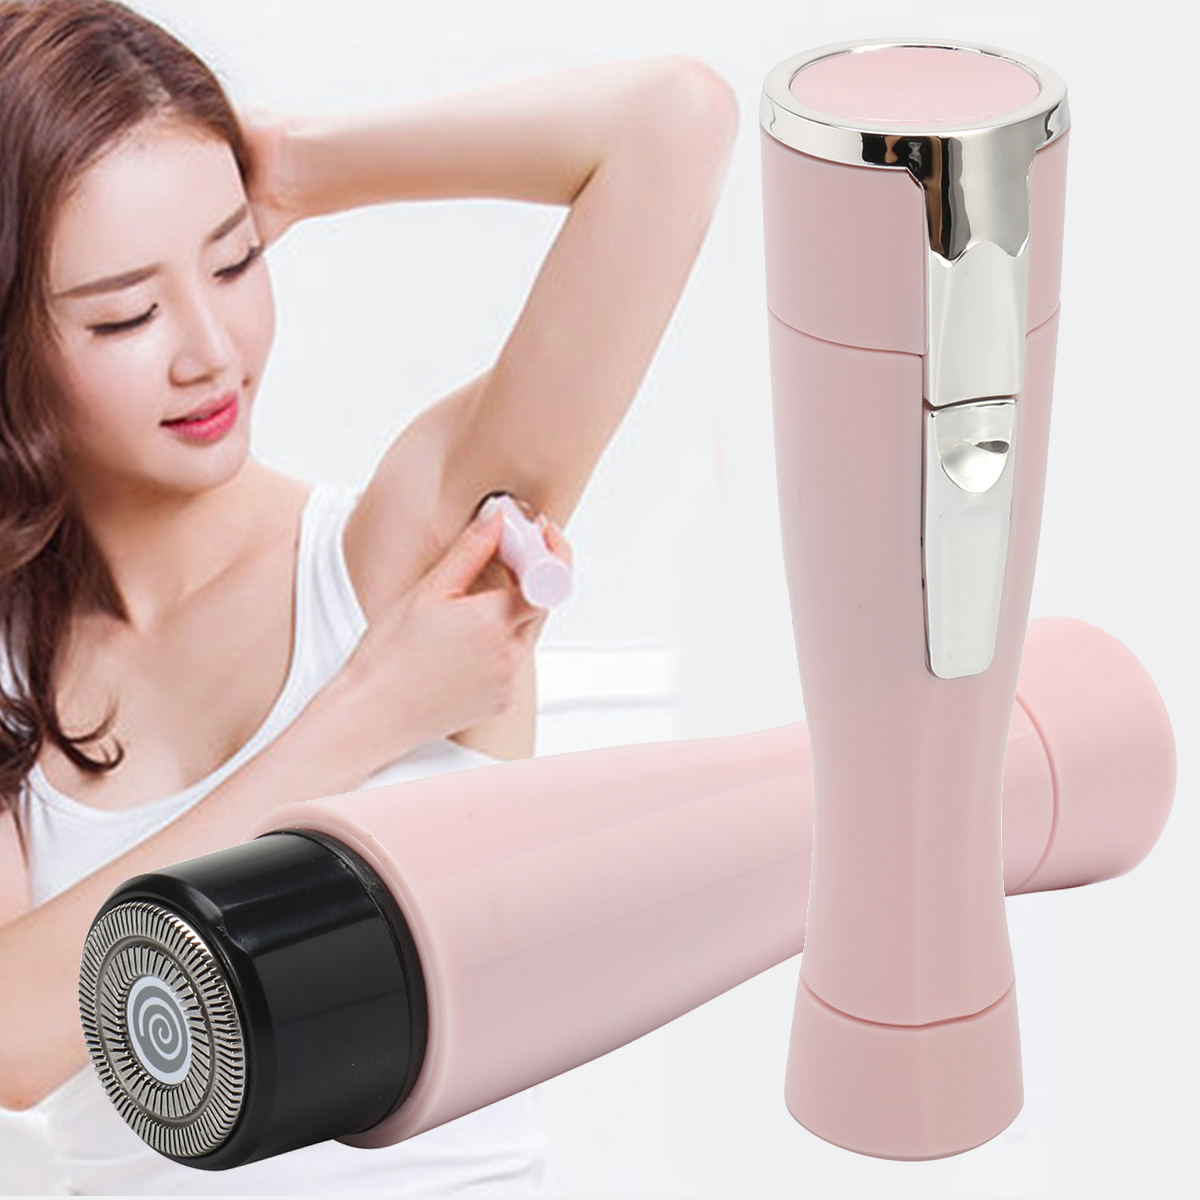 Portable-Mini-Electric-Women-Instant-Pain-Free-Body-Hair-Remover-Removal-Shaver-Razor-1212075